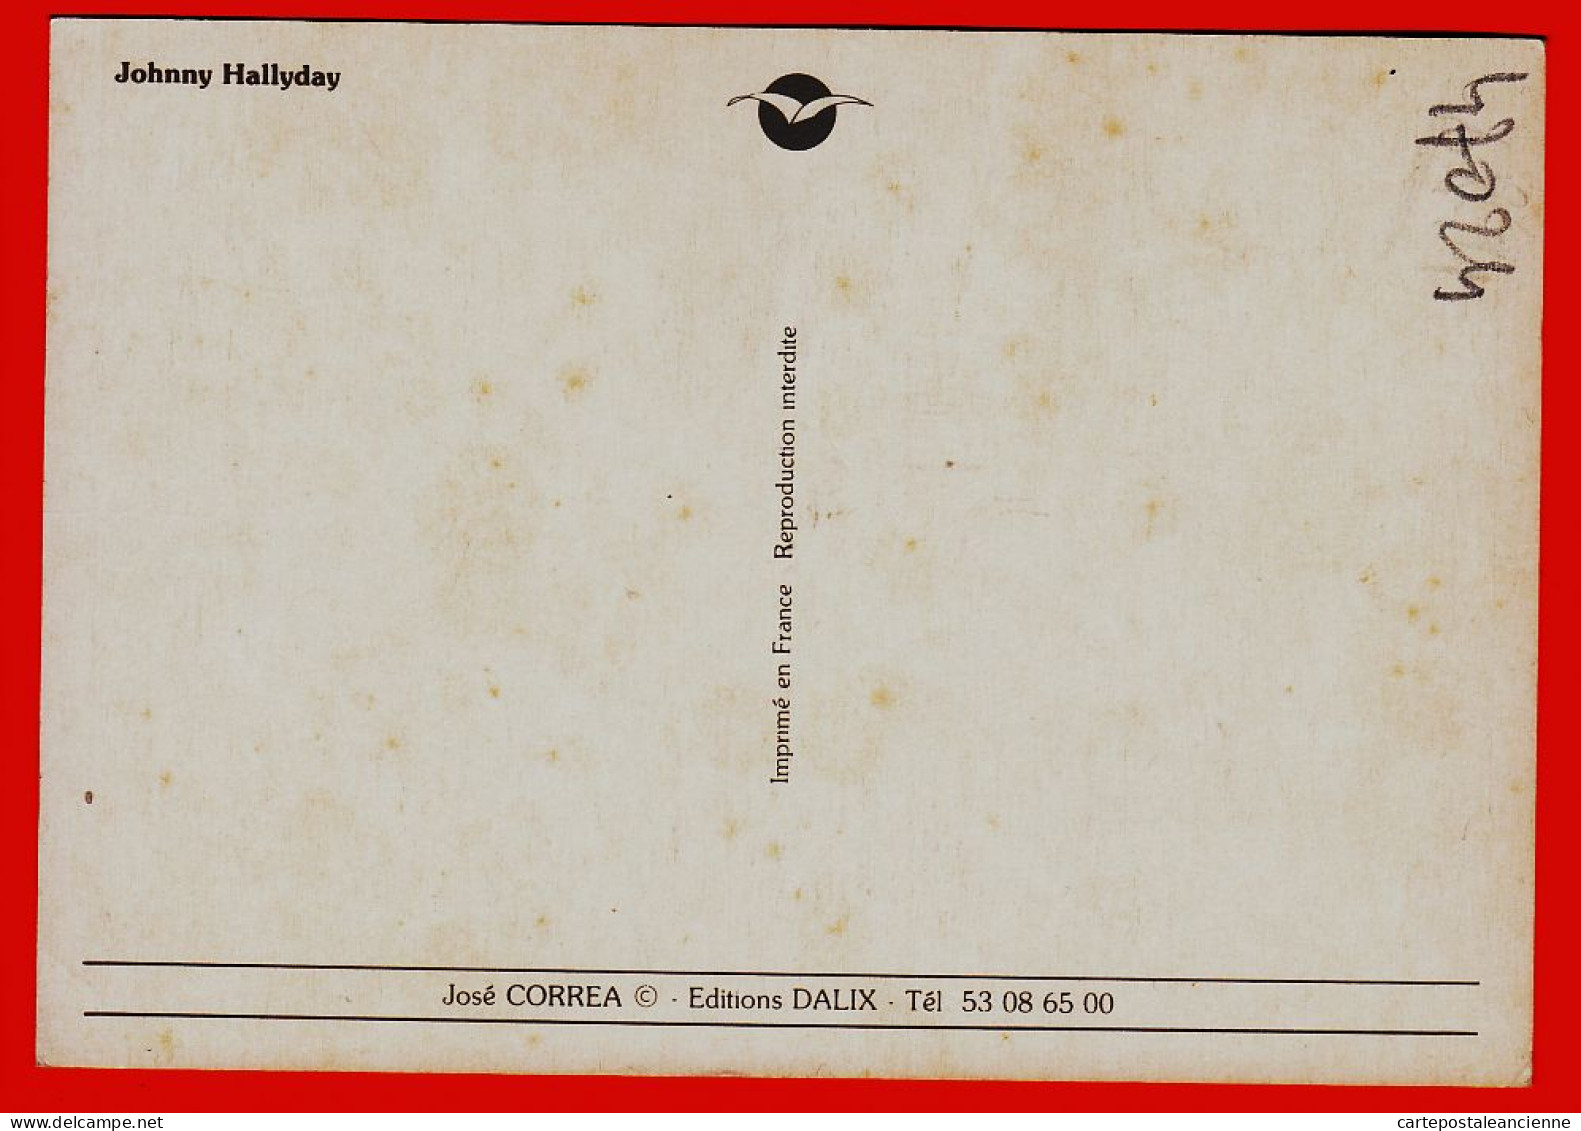 01738 / ⭐ SMET Jean-Philippe JOHNNY HALLYDAY 1943-2017 Illustrateur José CORREA 1980s Editions DALIX  - Chanteurs & Musiciens